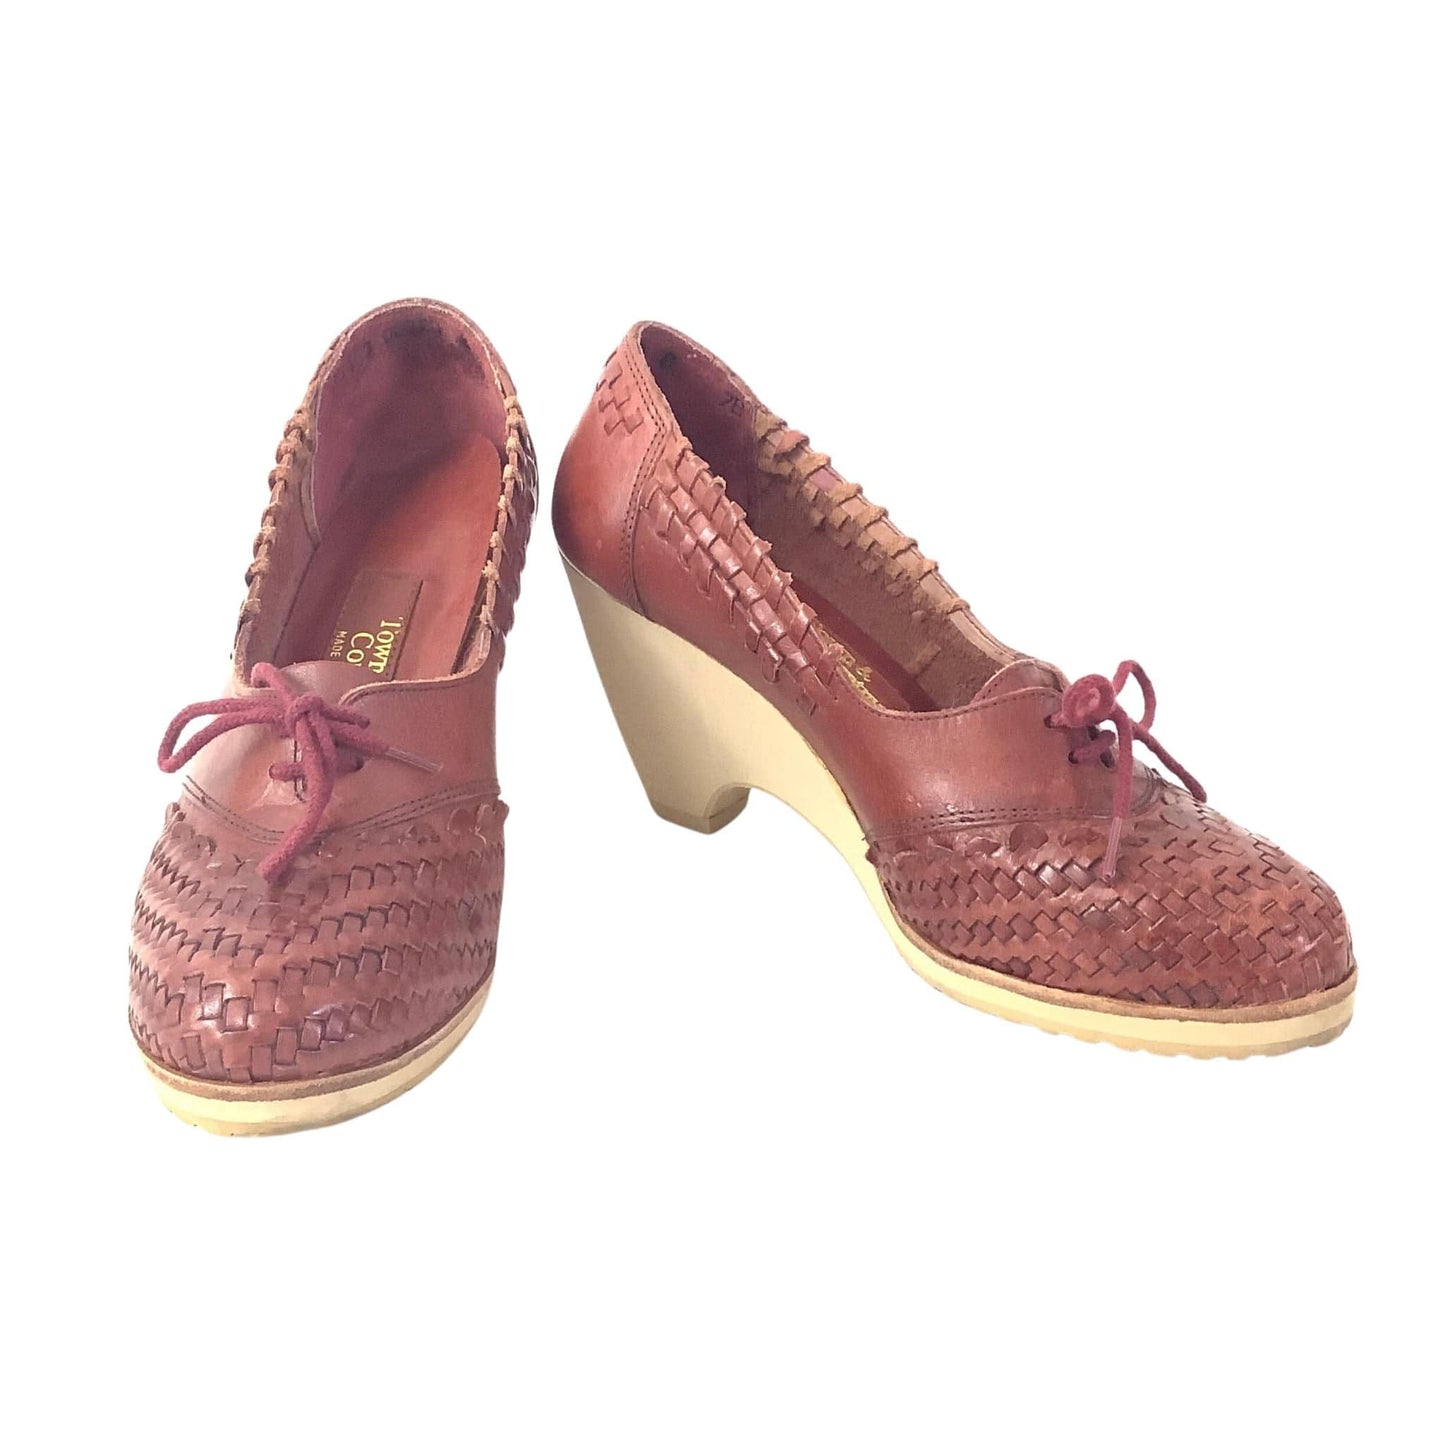 Vintage Woven Leather Shoes 7 / Burgundy / Vintage 1980s